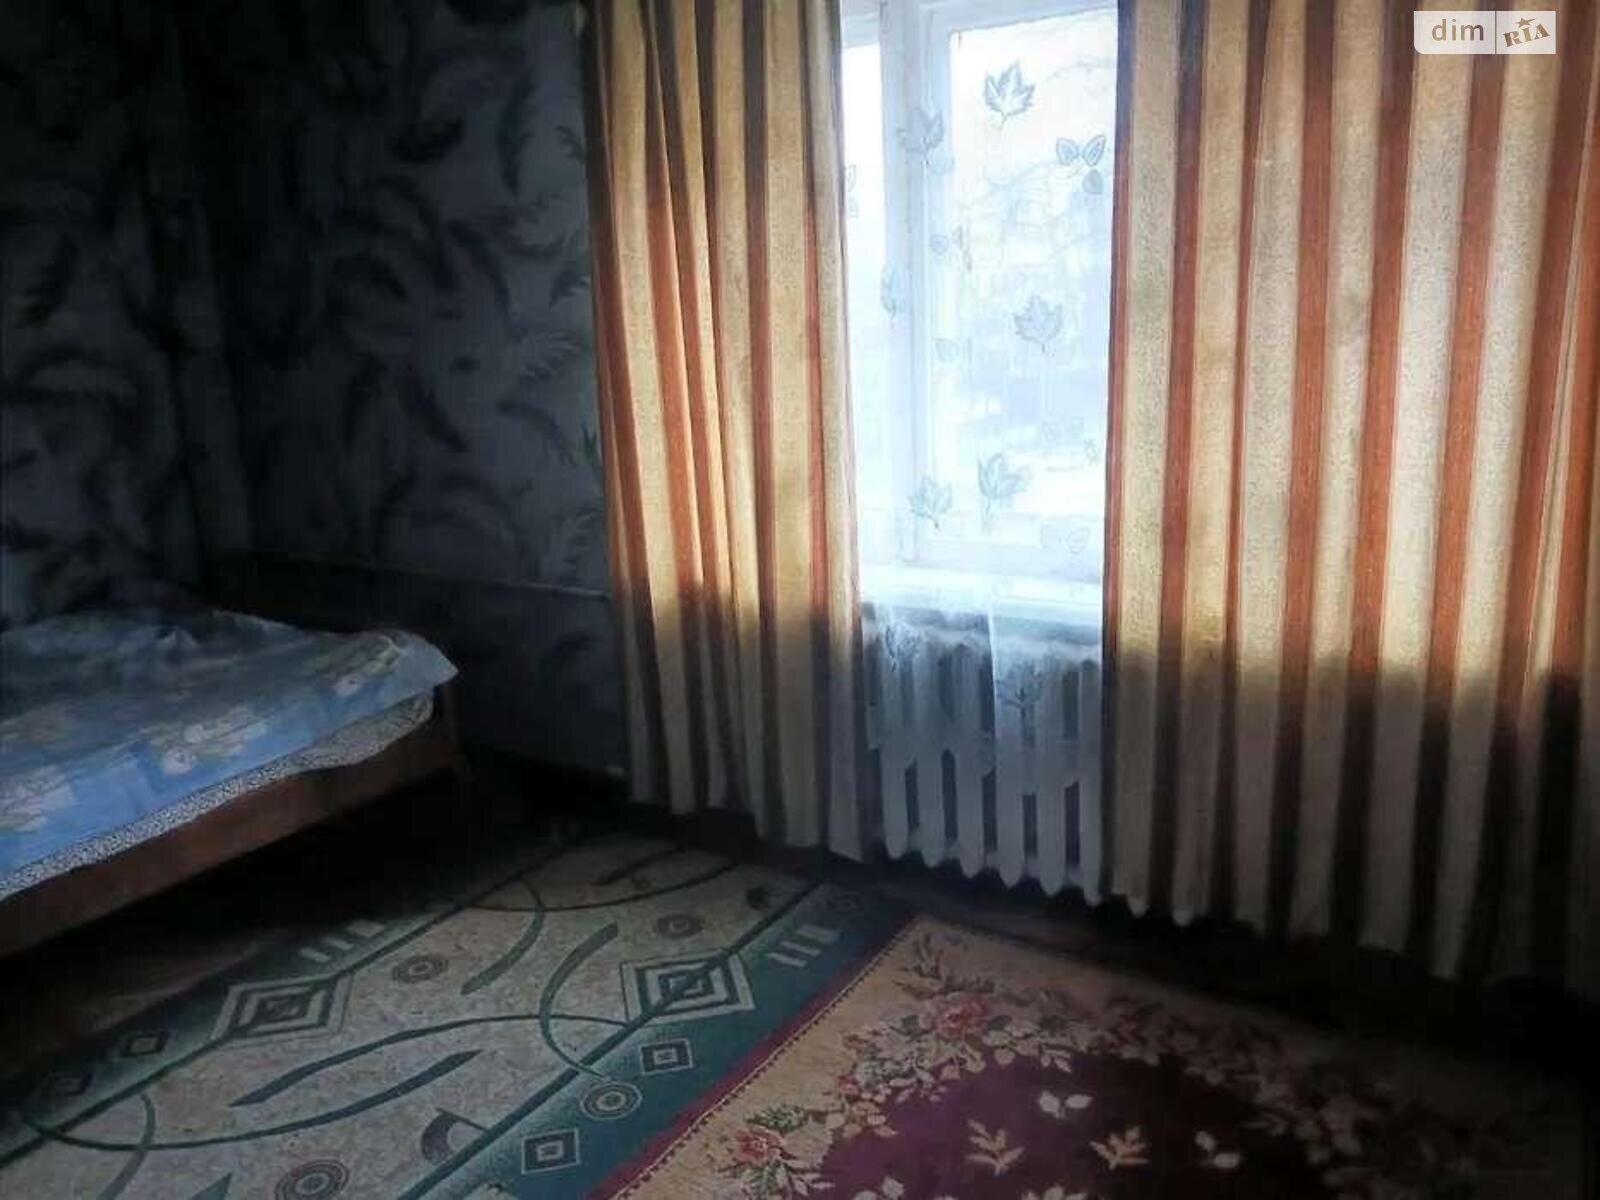 Продаж двокімнатної квартири в Харкові, на просп. Науки 37, район Павлове Поле фото 1